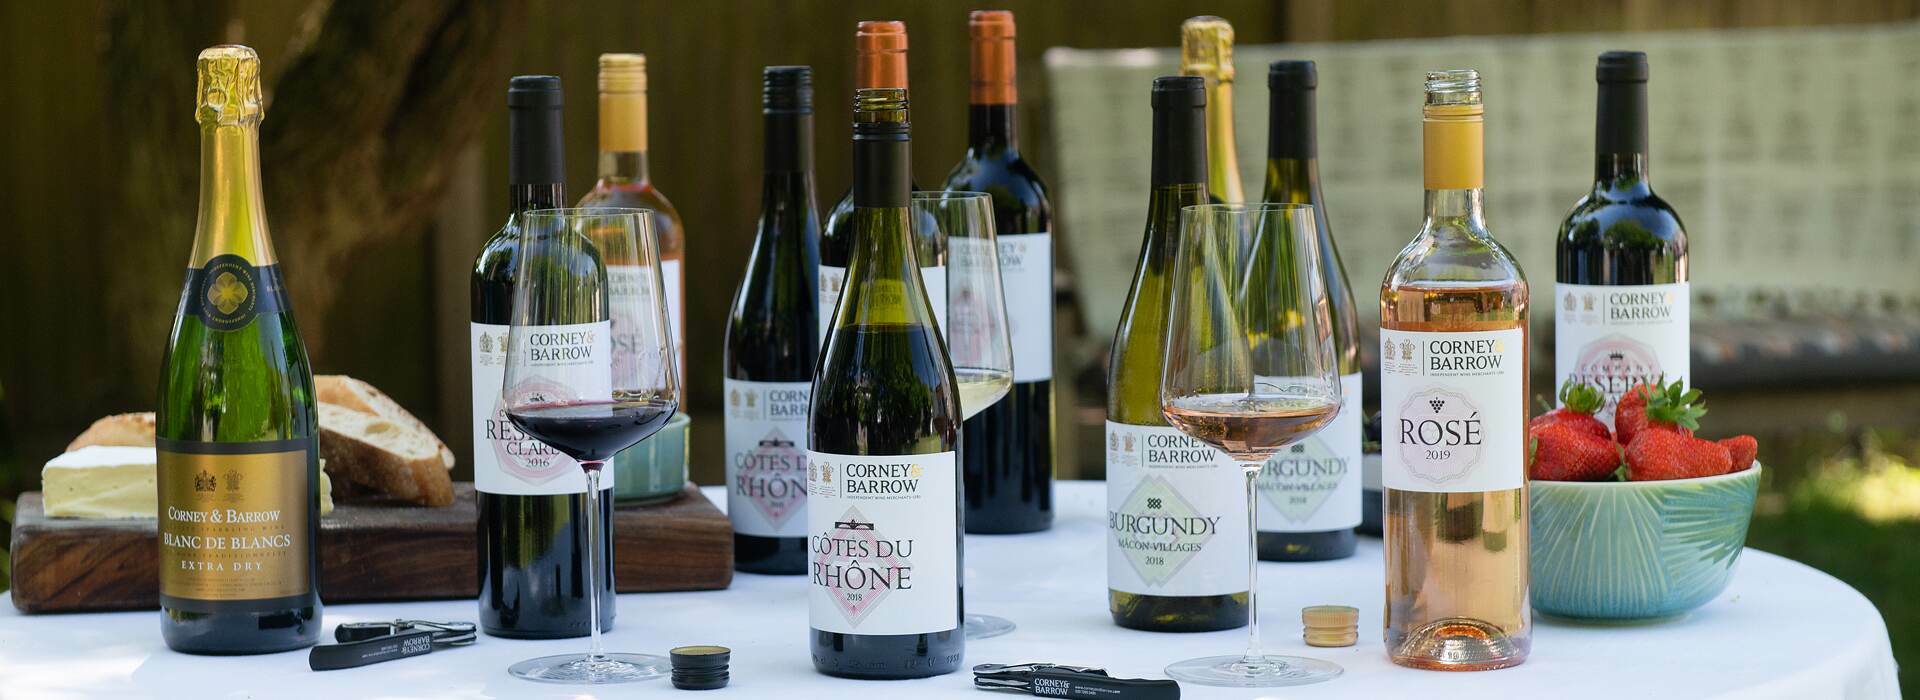 Corney & Barrow own label wines